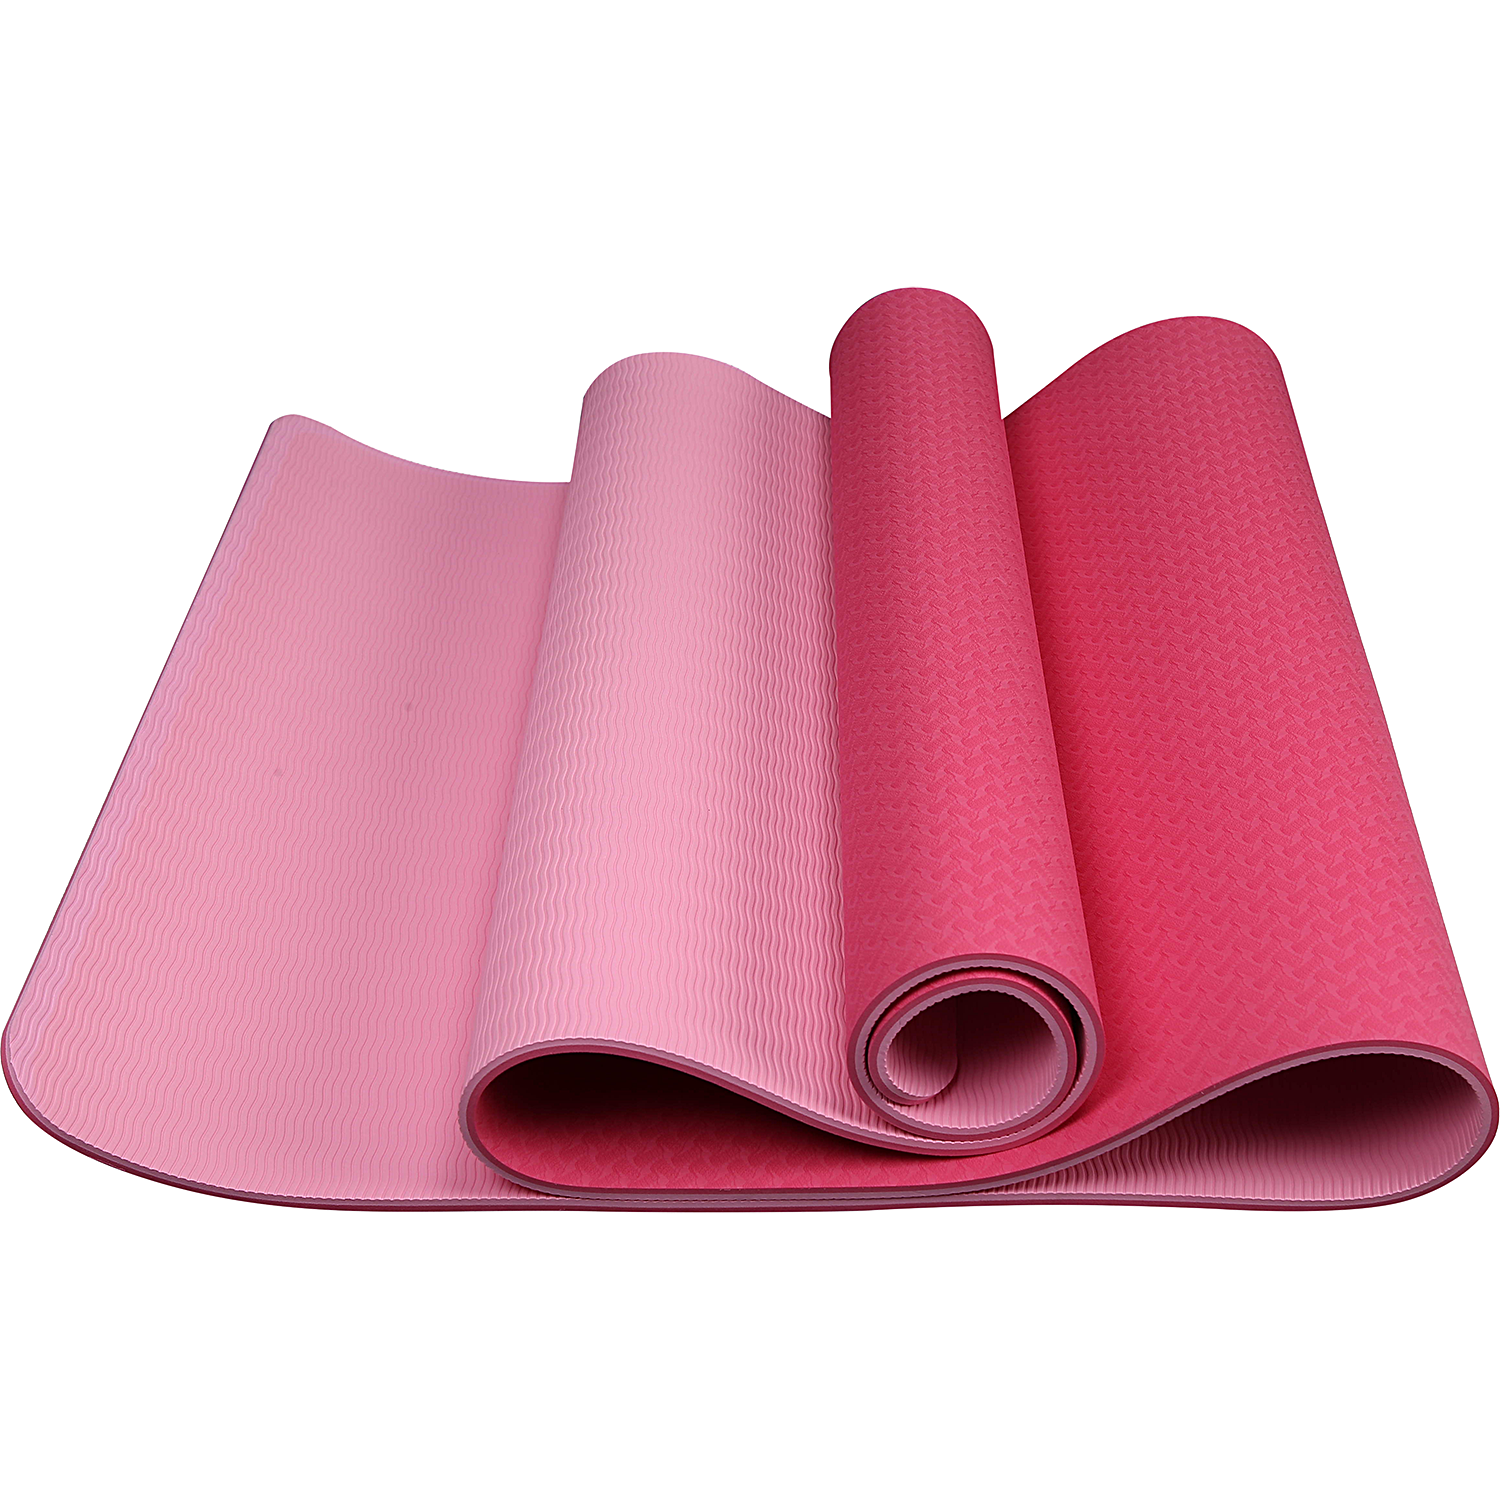 TPE Yoga mat – Topko-store